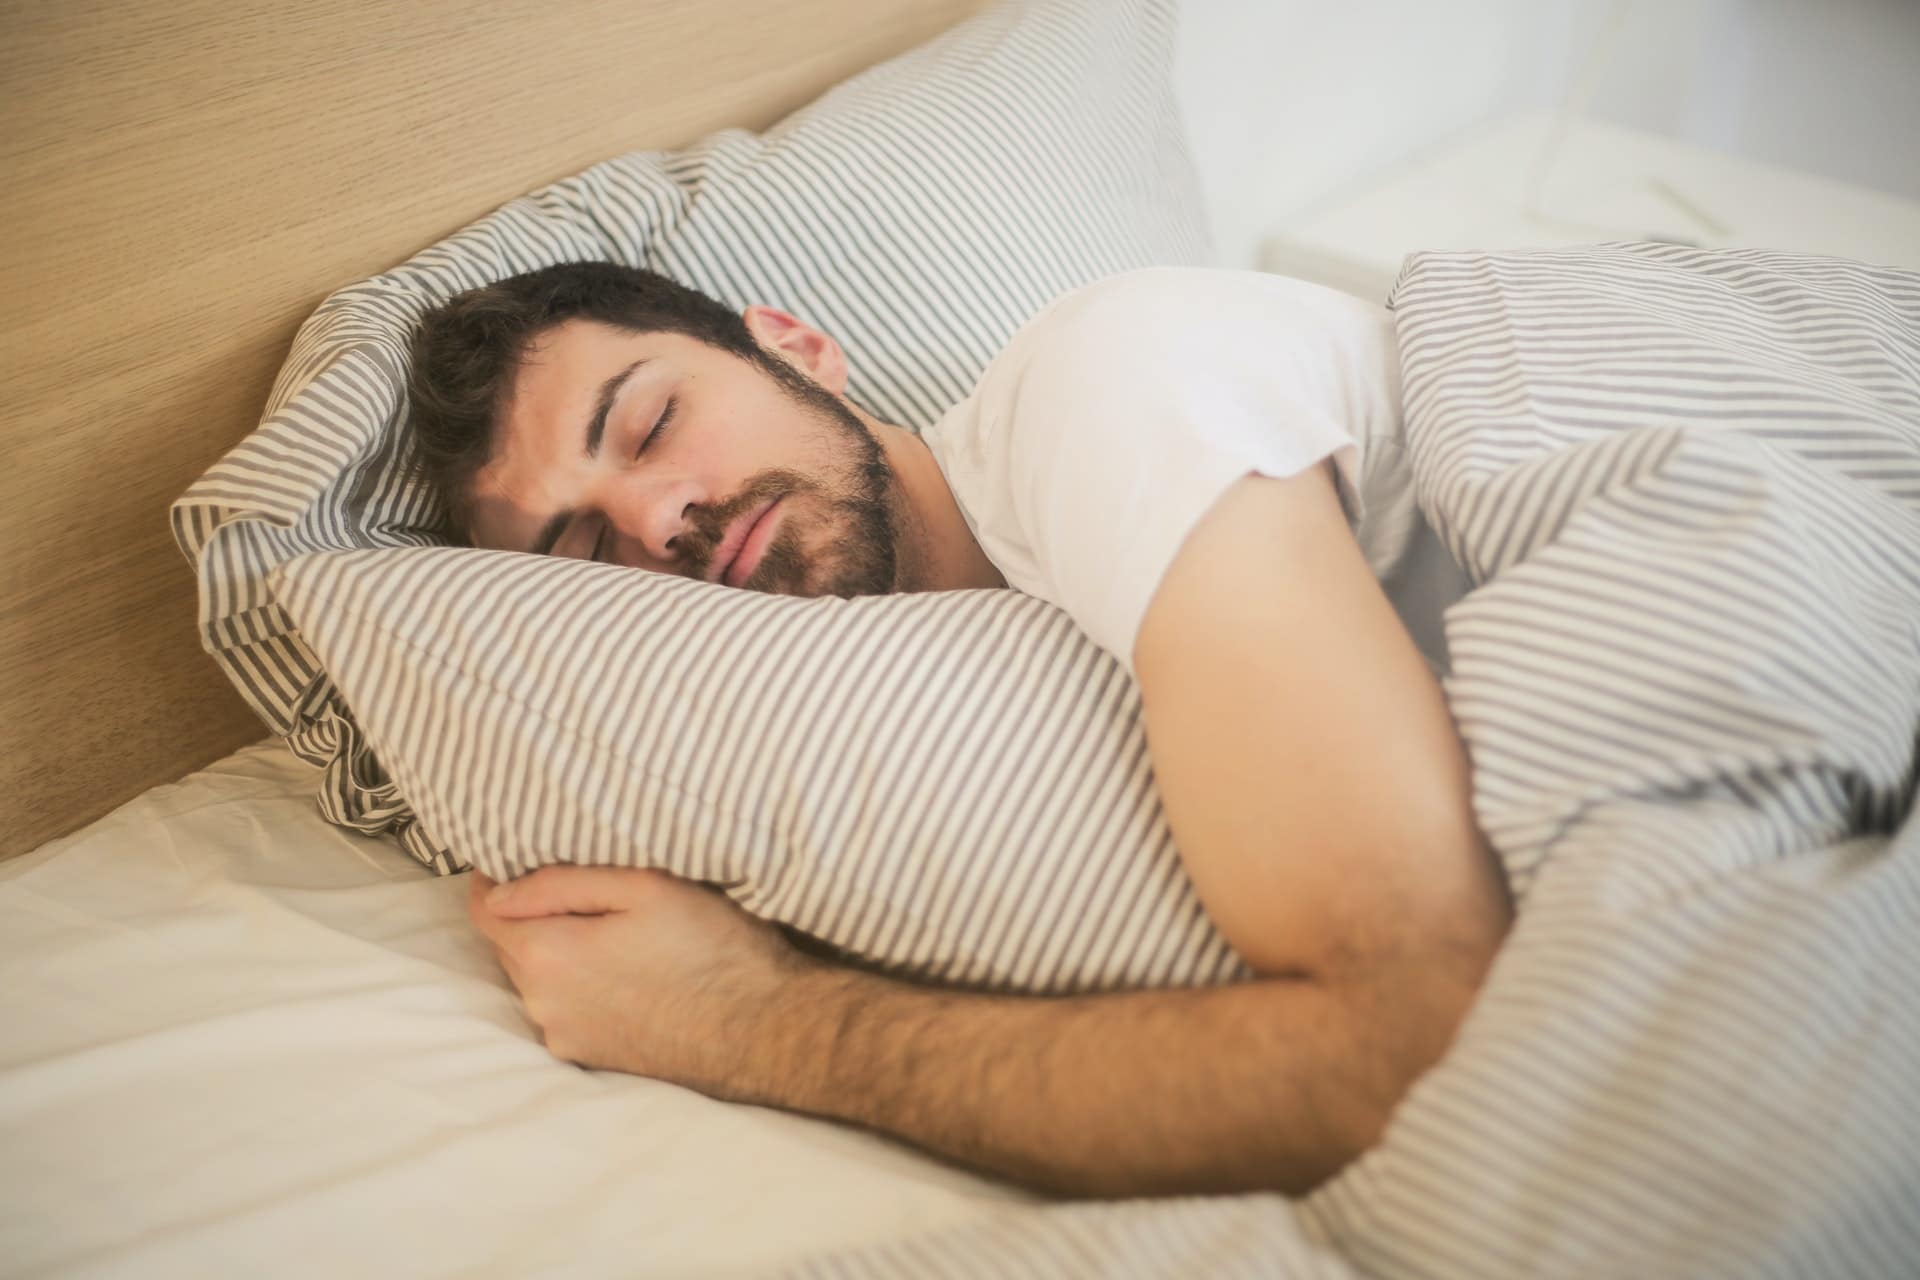 Man sleeping - How to improve your circadian rhythm